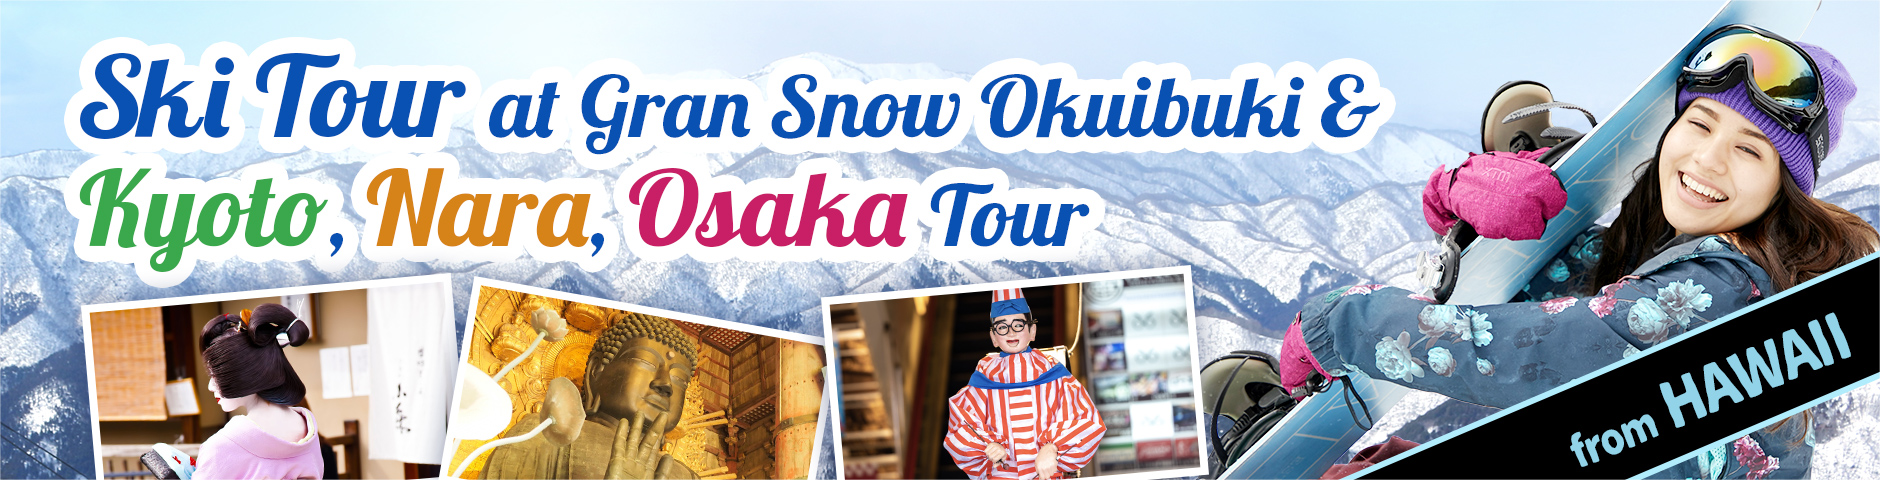 FM Pro Ski Tour & Sight Seeing in Kyoto, Nara, & Osaka